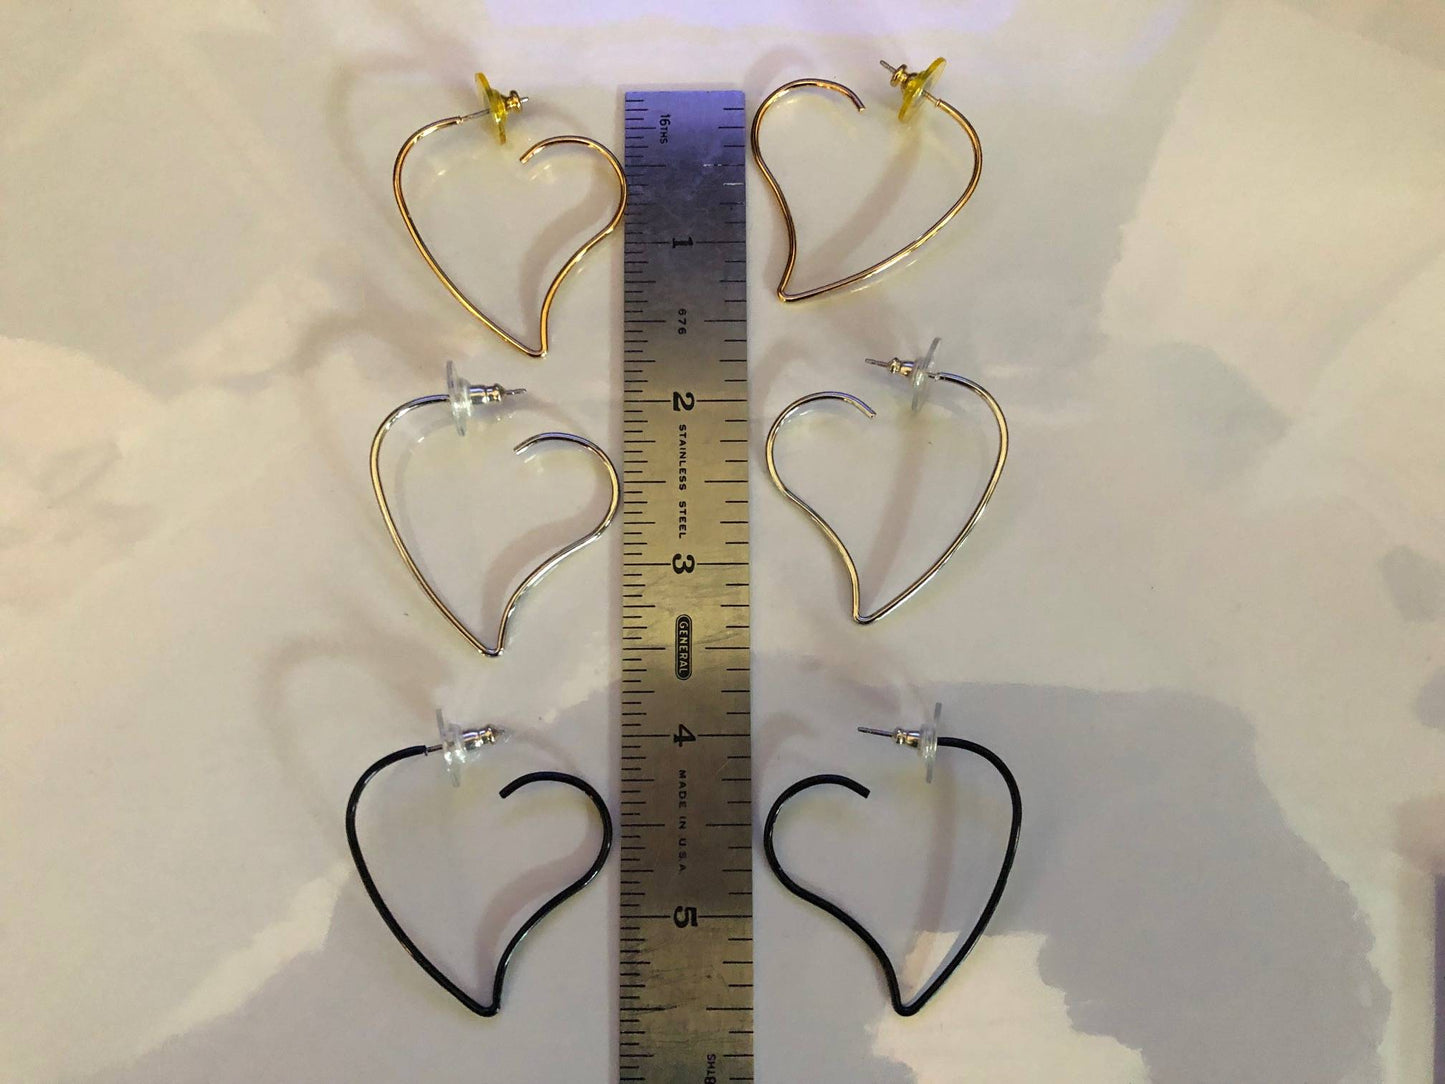 Heart Shaped Wire Earrings Gold, Silver, or Black